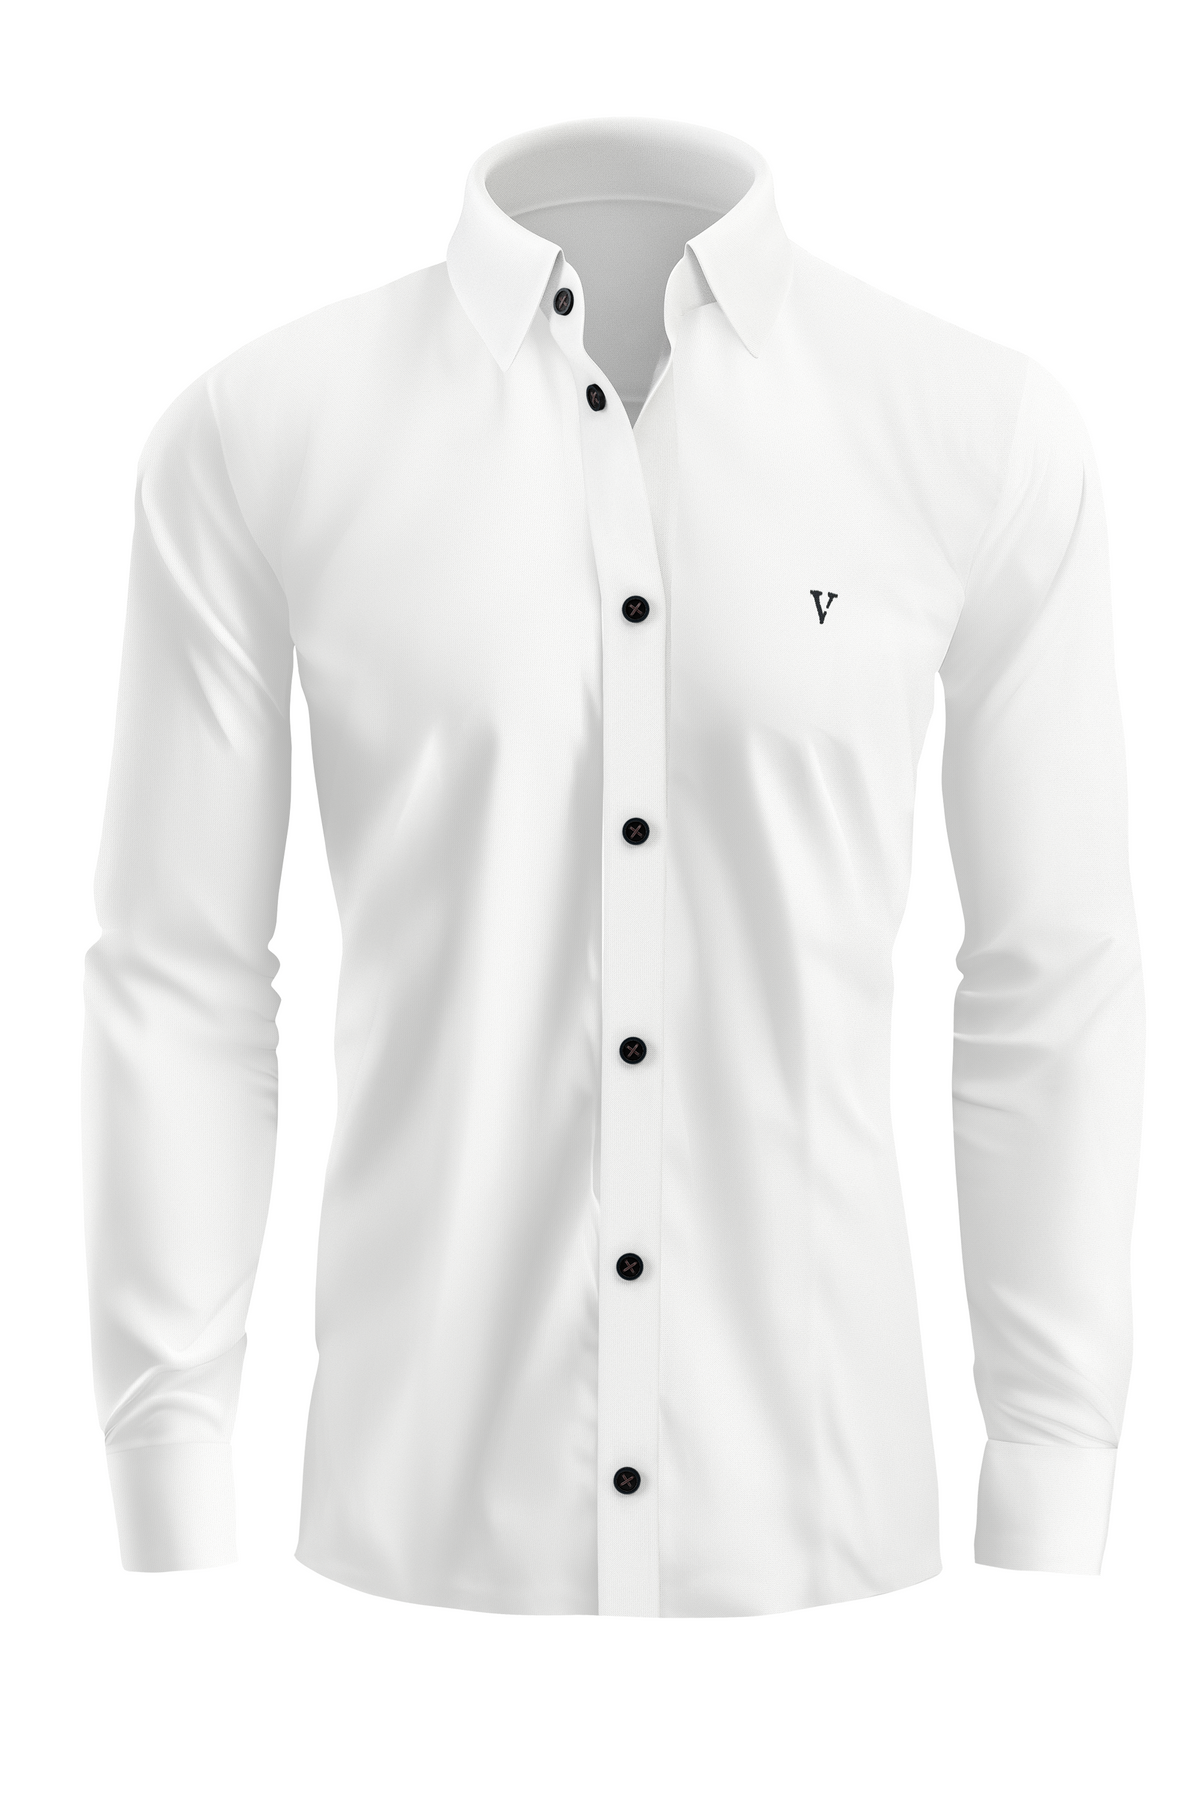 Vercini Versatile Collection: Classic Shirt with Signature 'V' Emblem